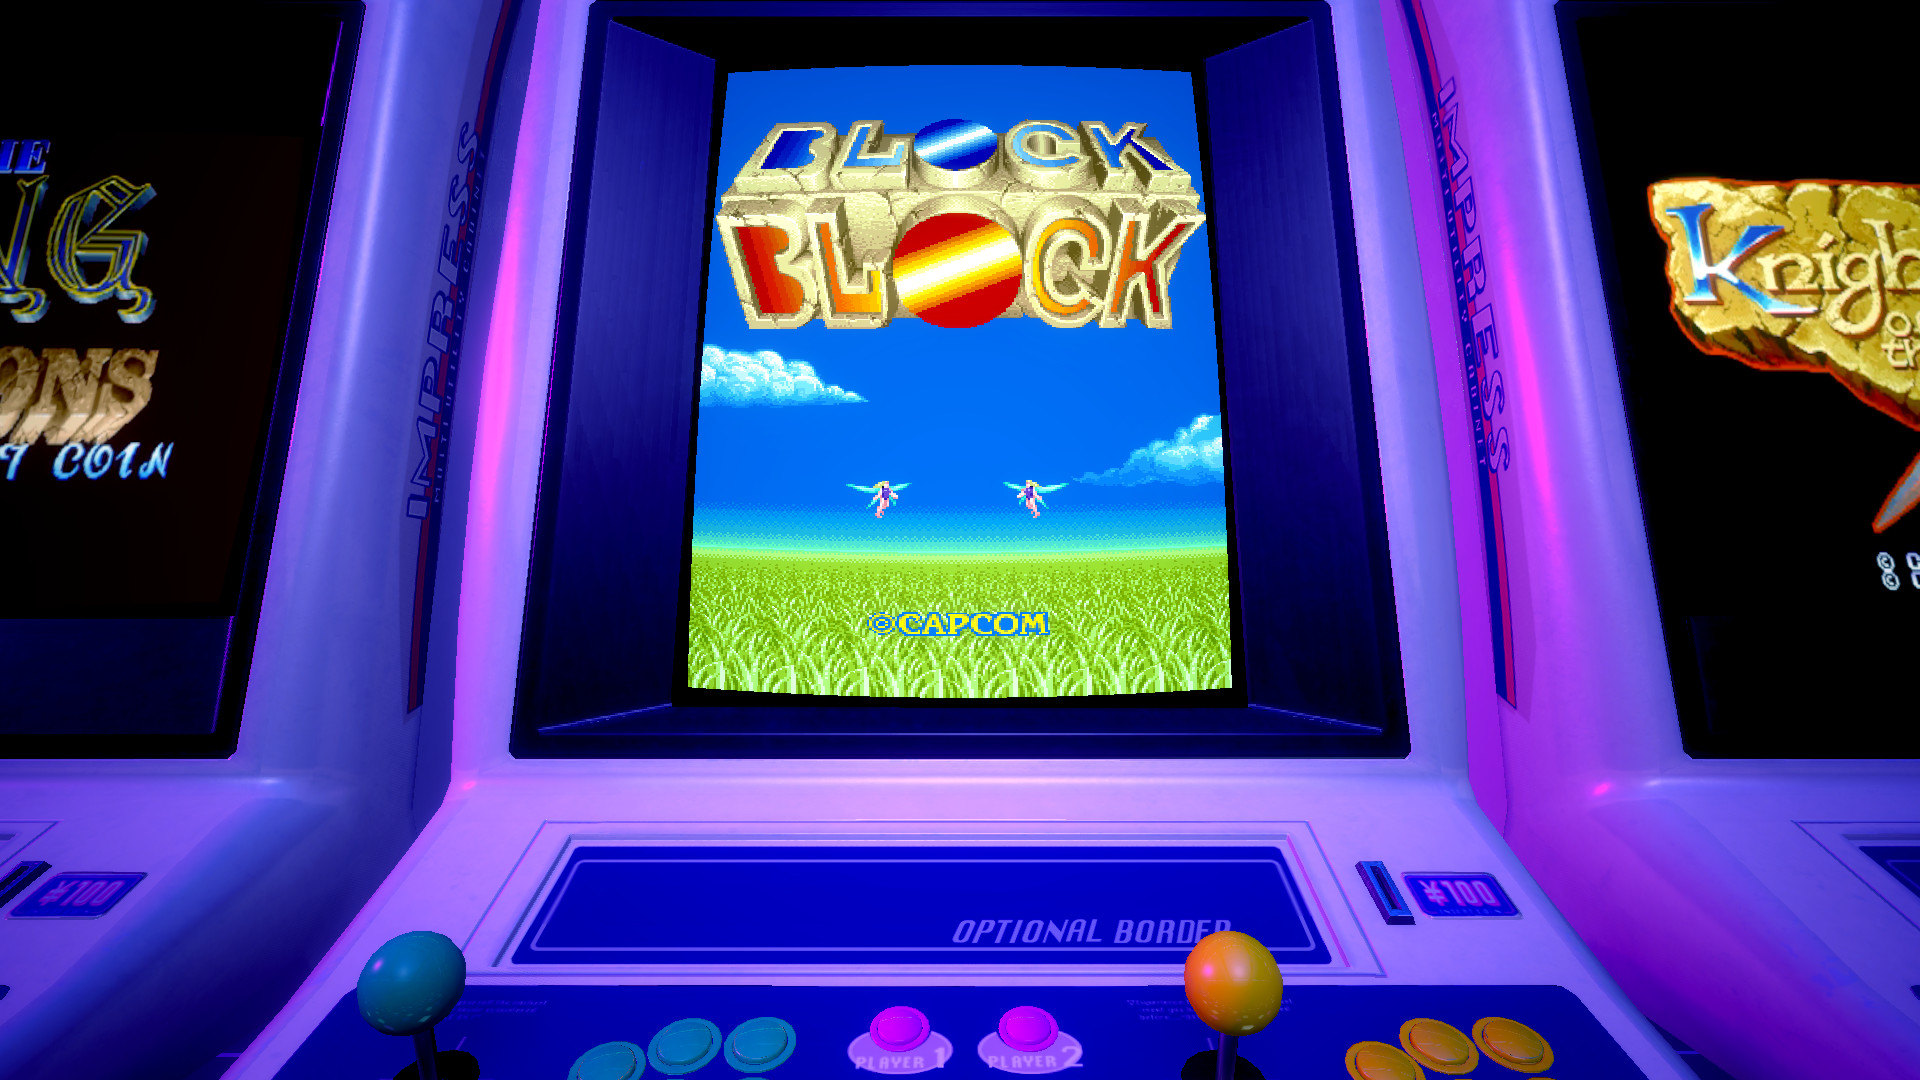 Capcom Arcade 2nd Stadium: A.K.A Block Block Featured Screenshot #1